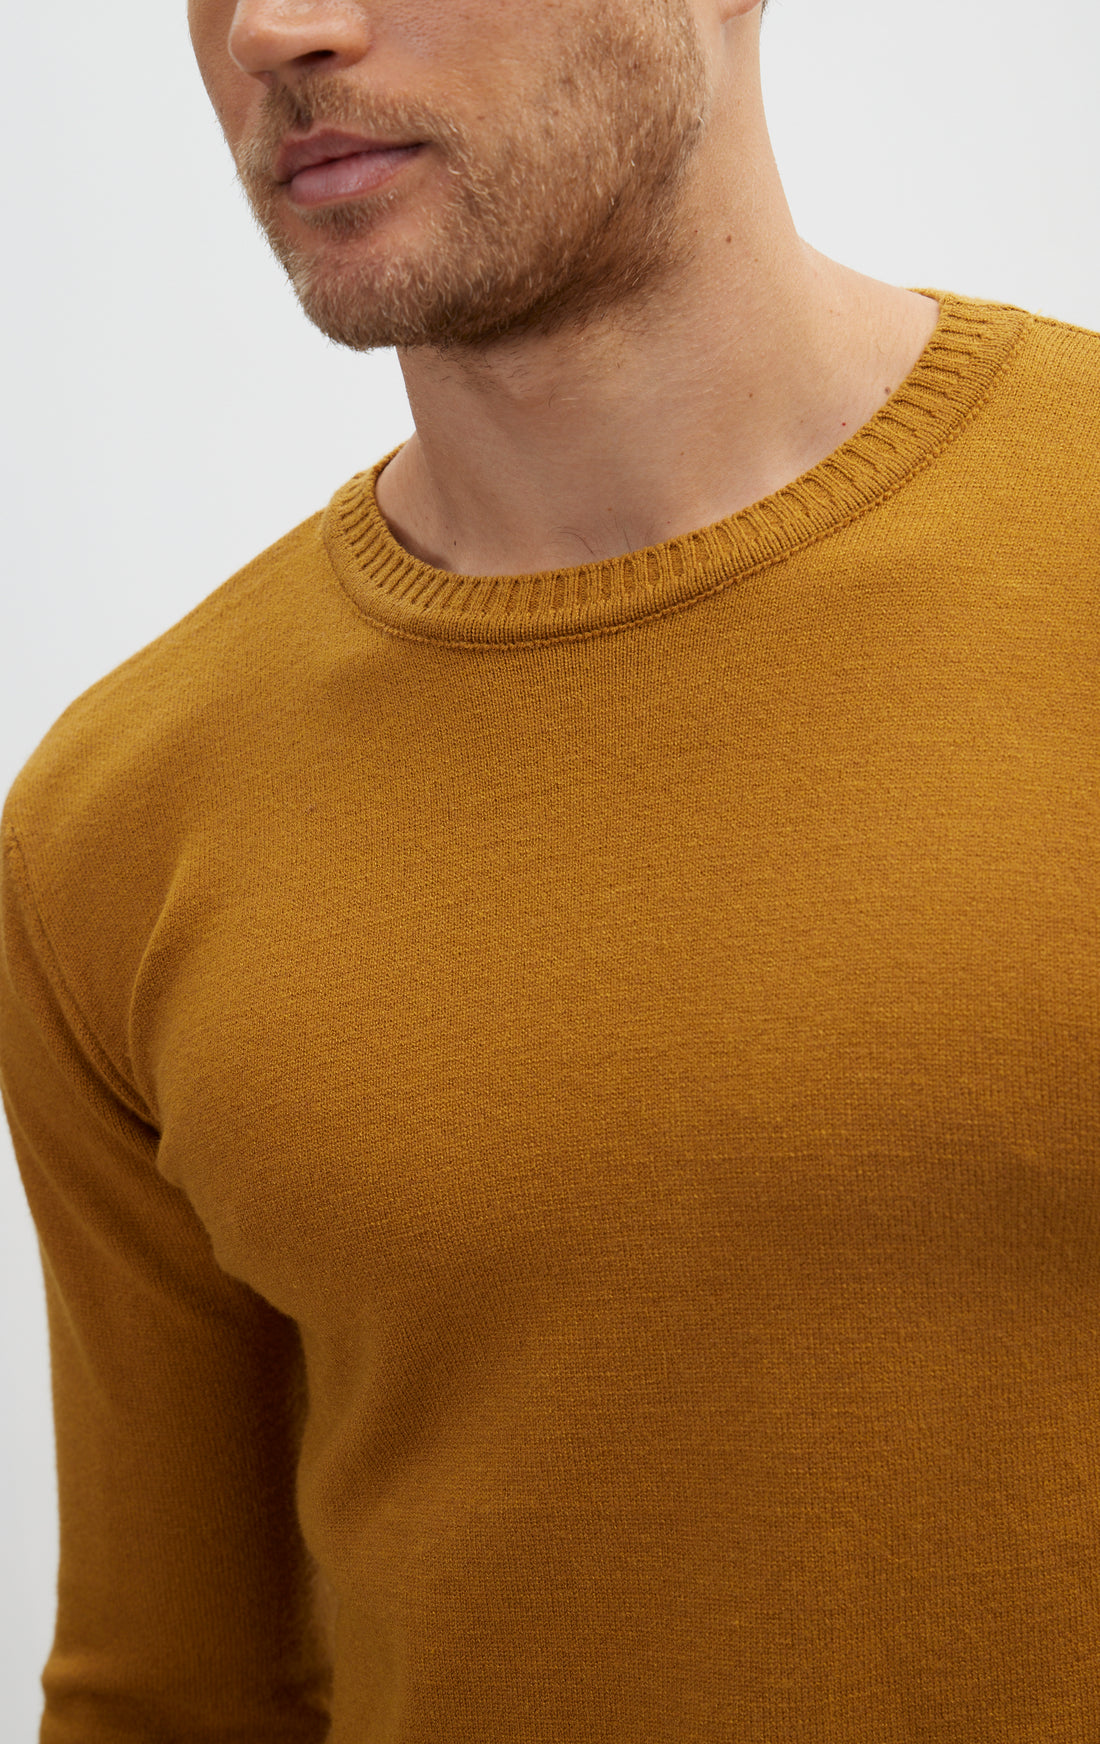 N° 6457 classic crew neck sweater - MUSTARD